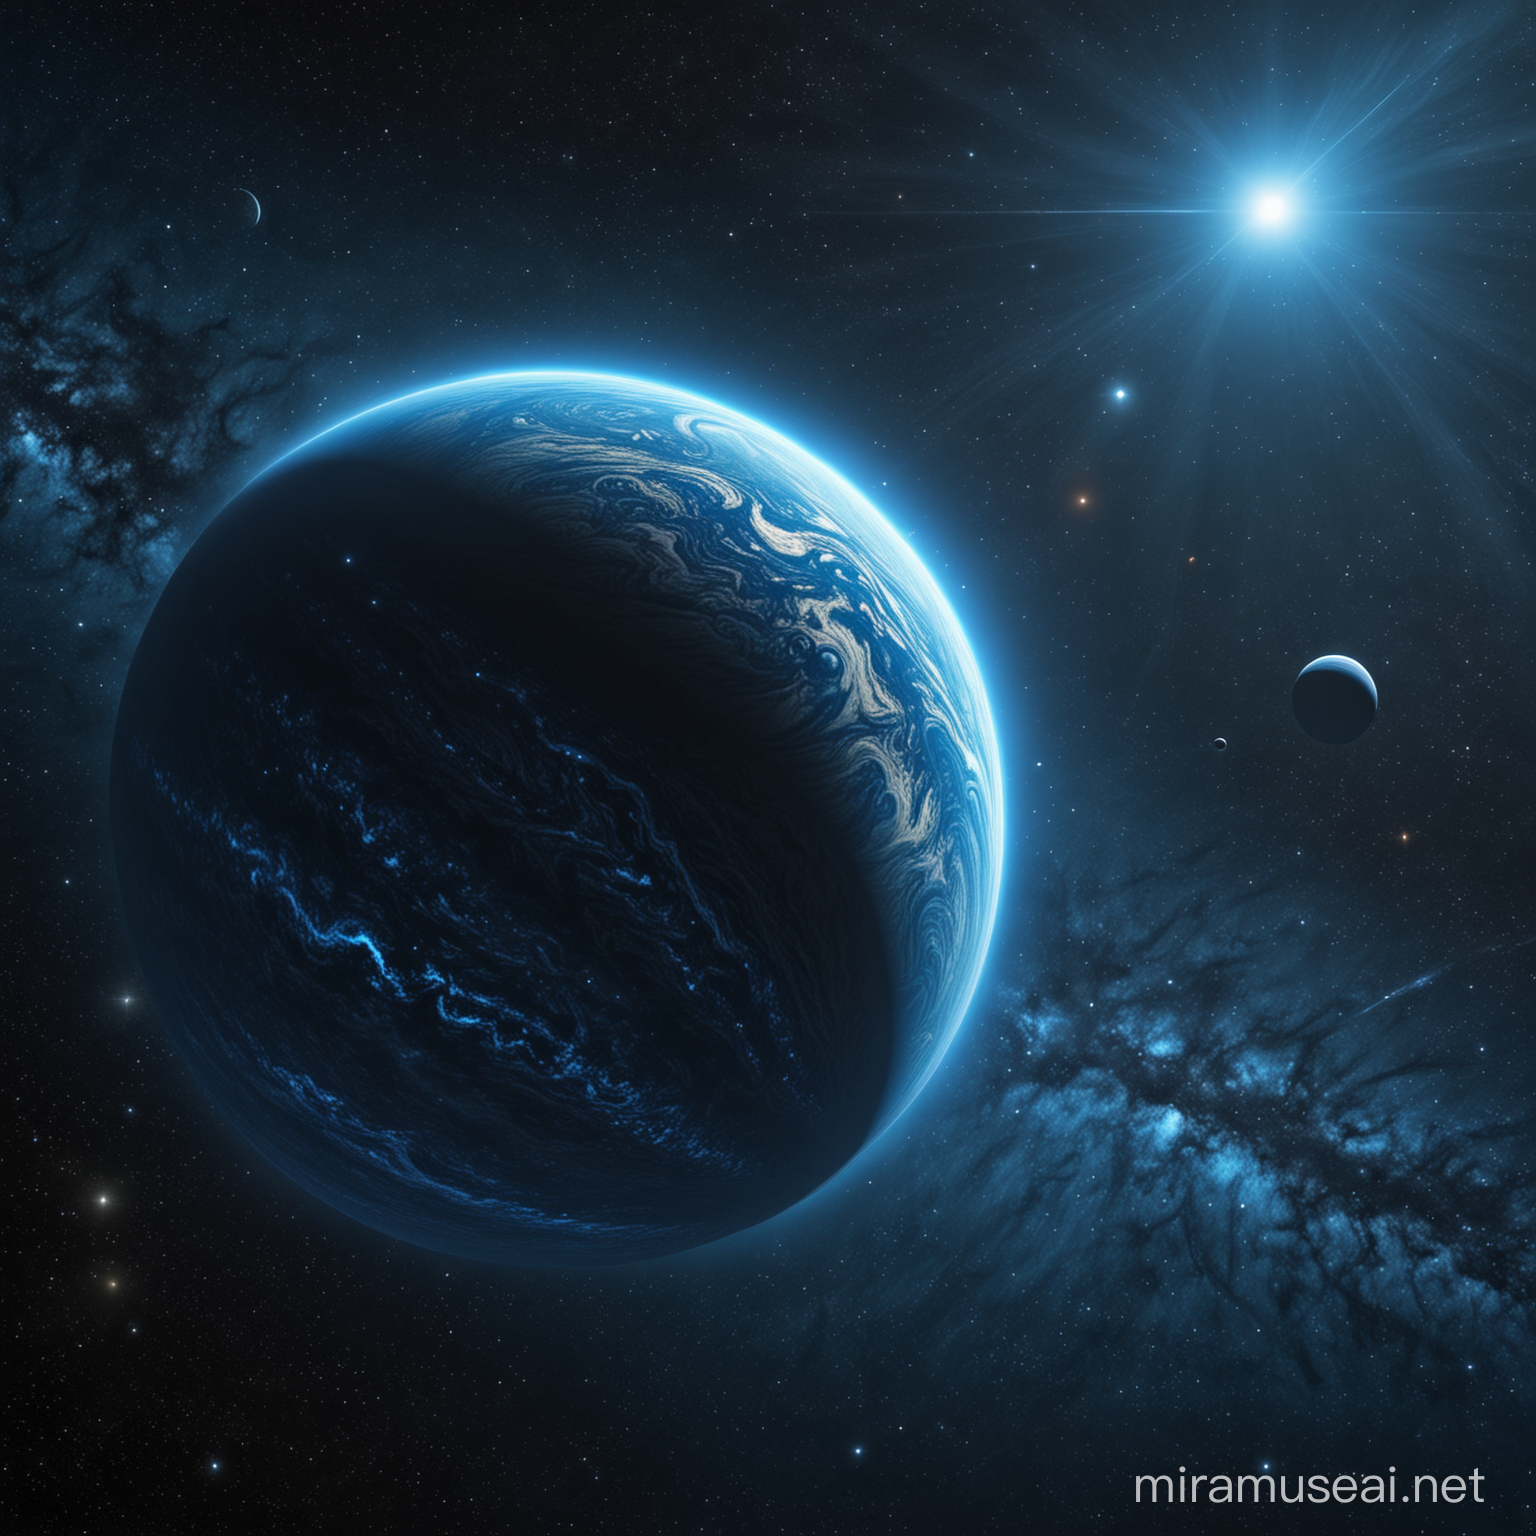 Azure Blue Gas Giant Exoplanet Against Dark Cosmic Background